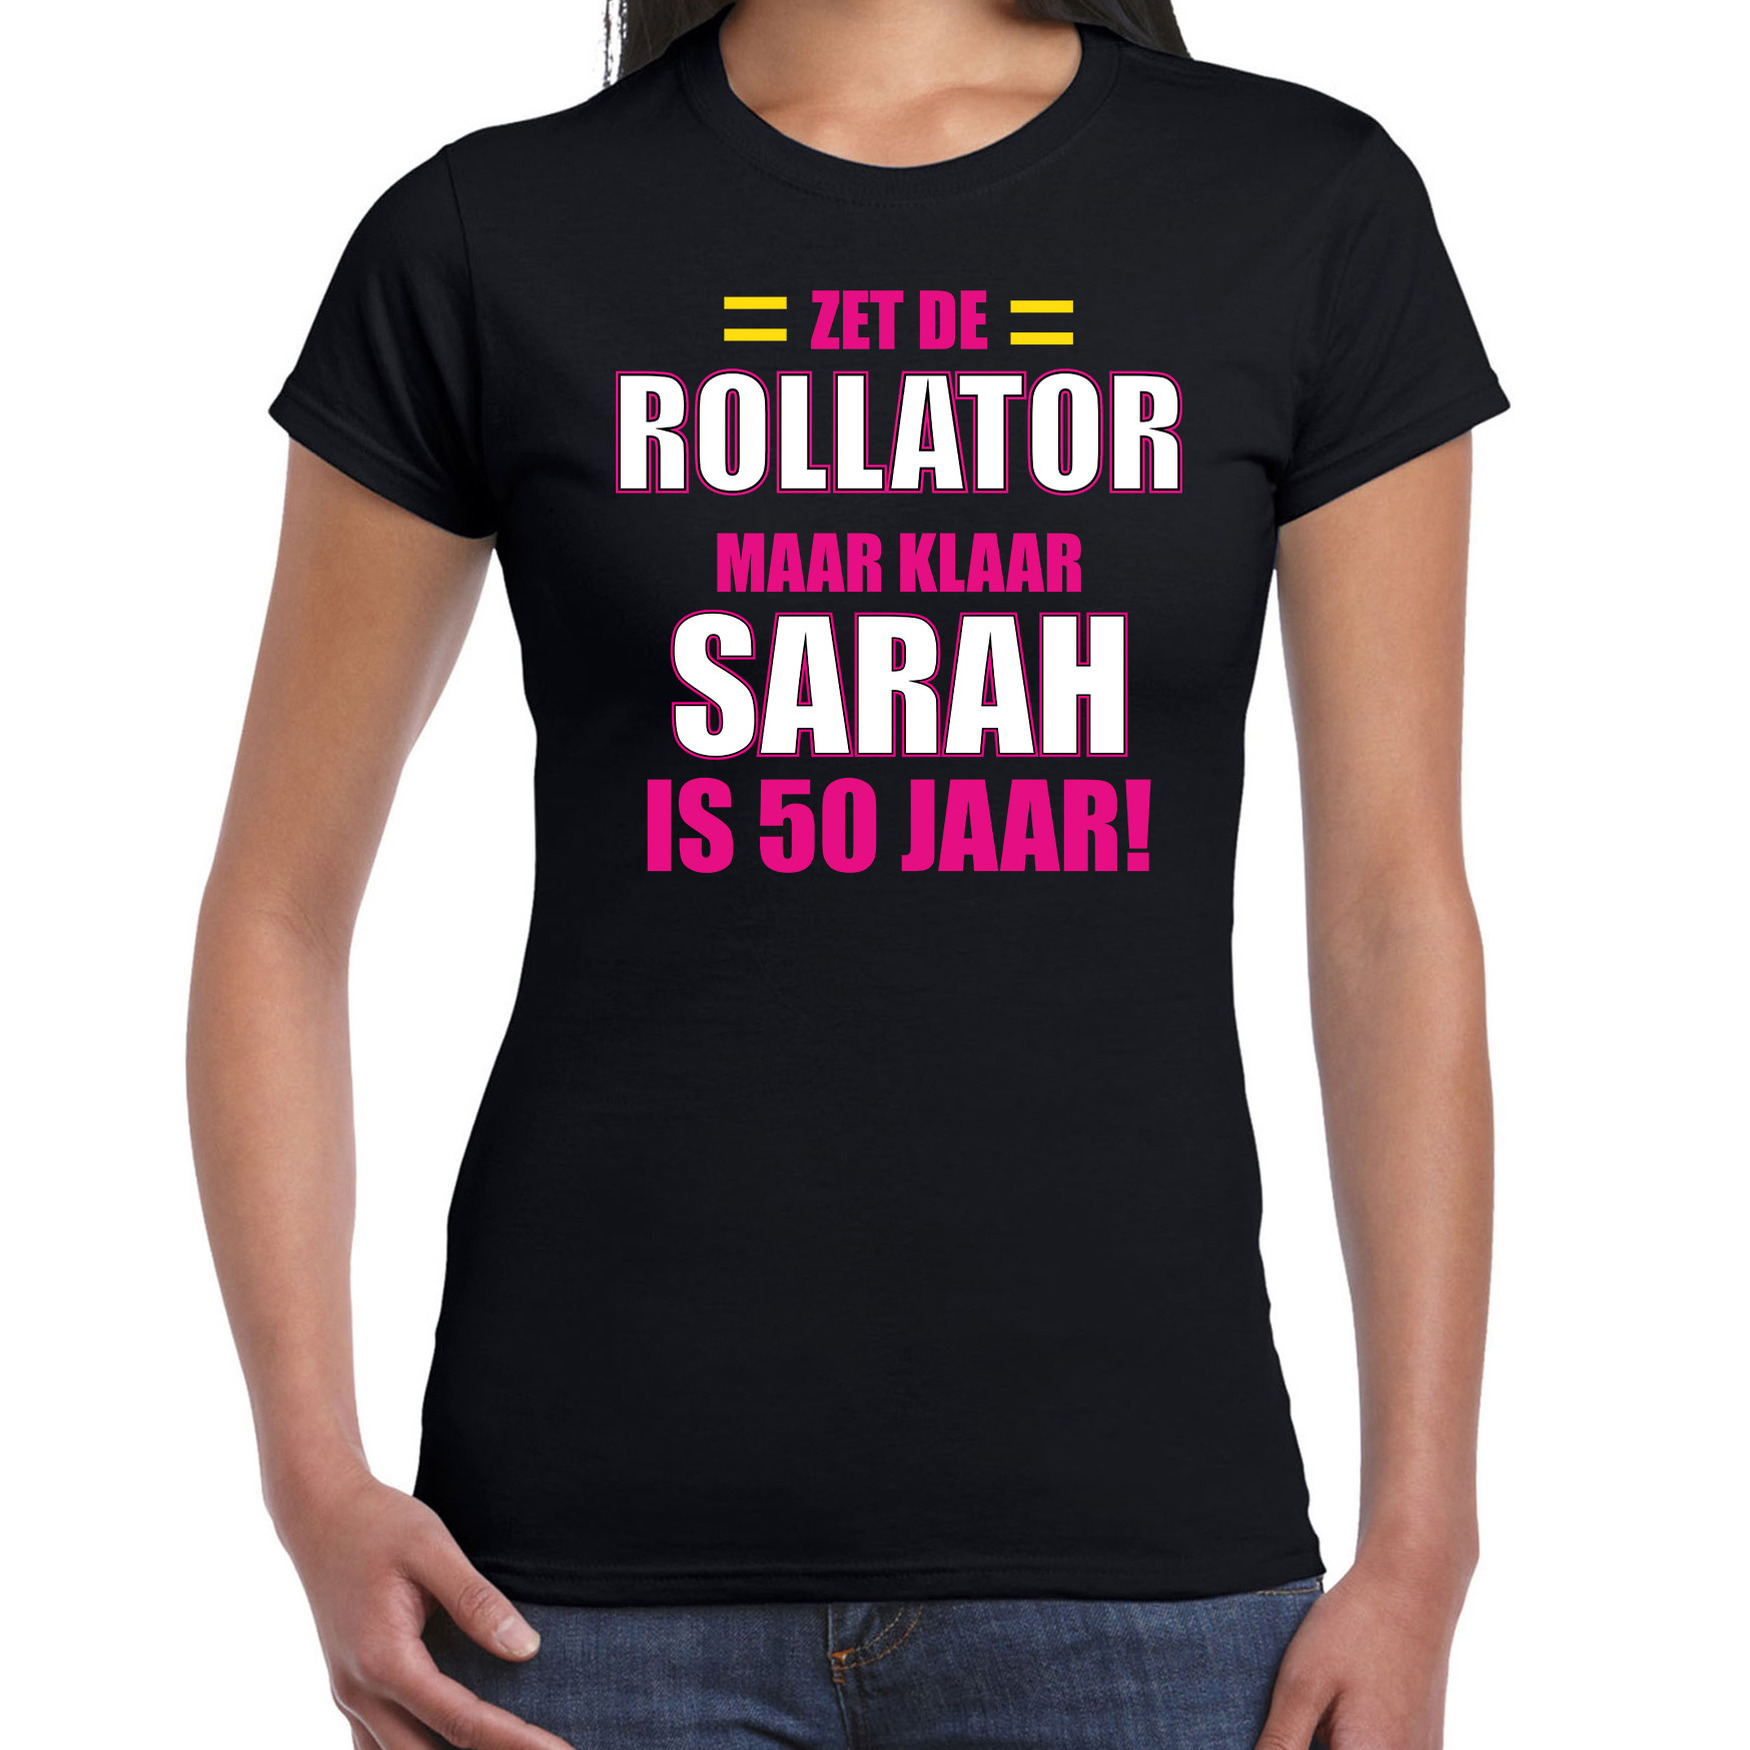 Rollator 50 jaar verjaardag t-shirt Sarah zwart dames cadeau shirt